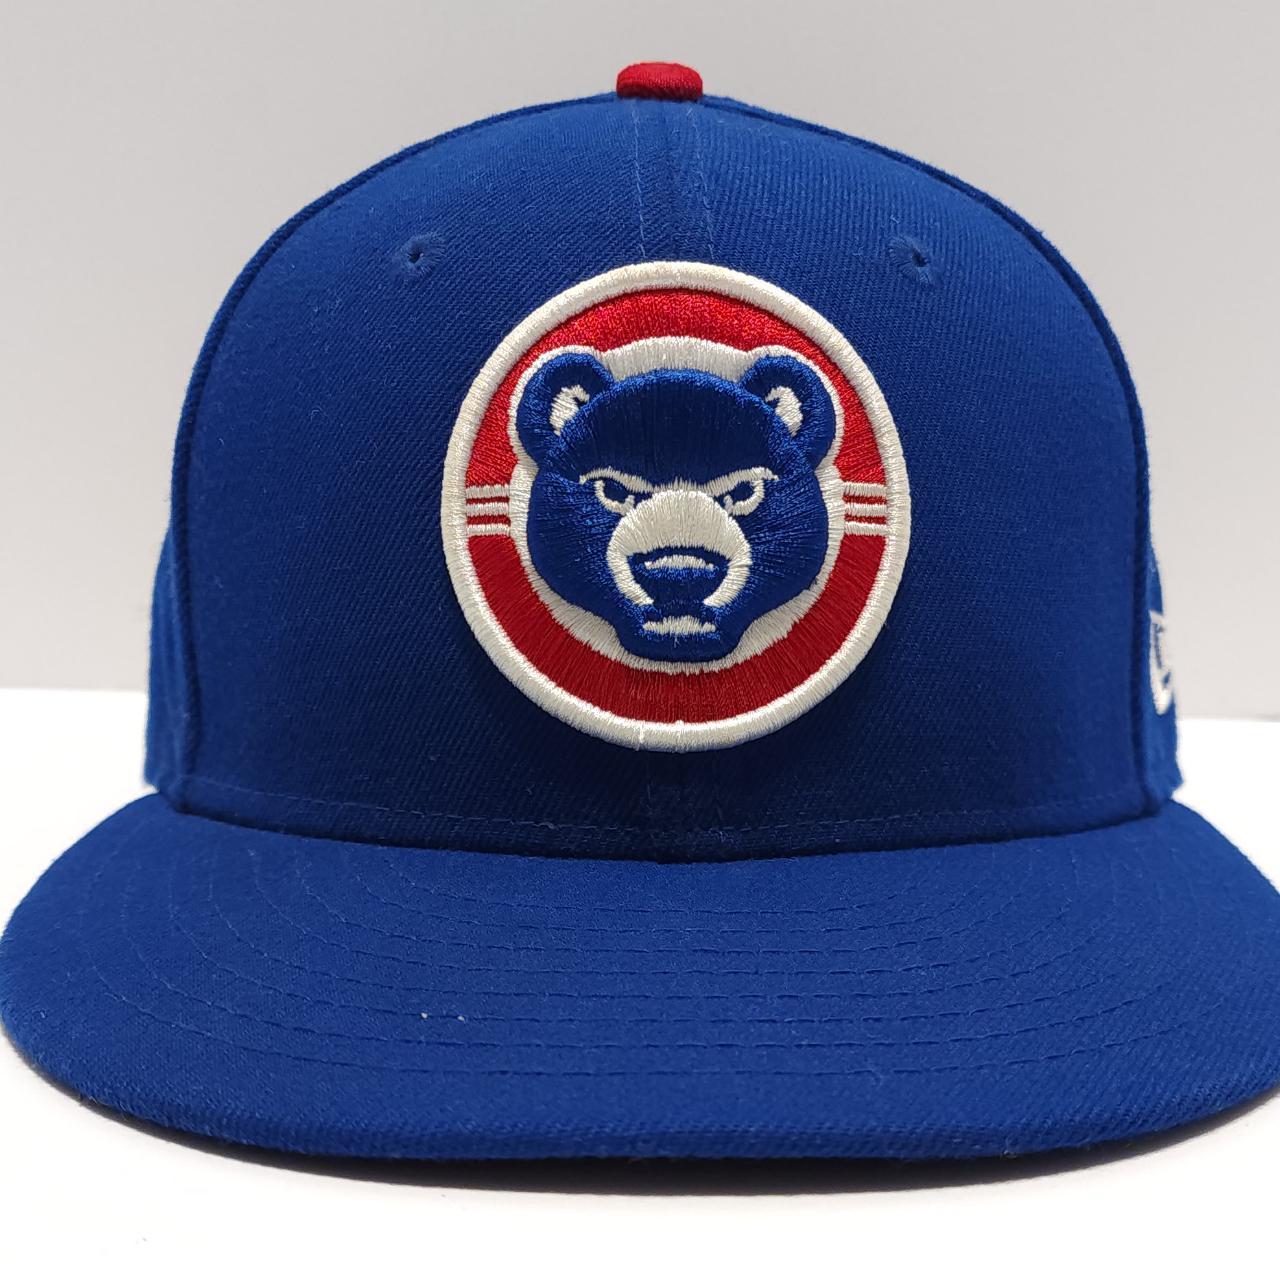 south bend cubs hat